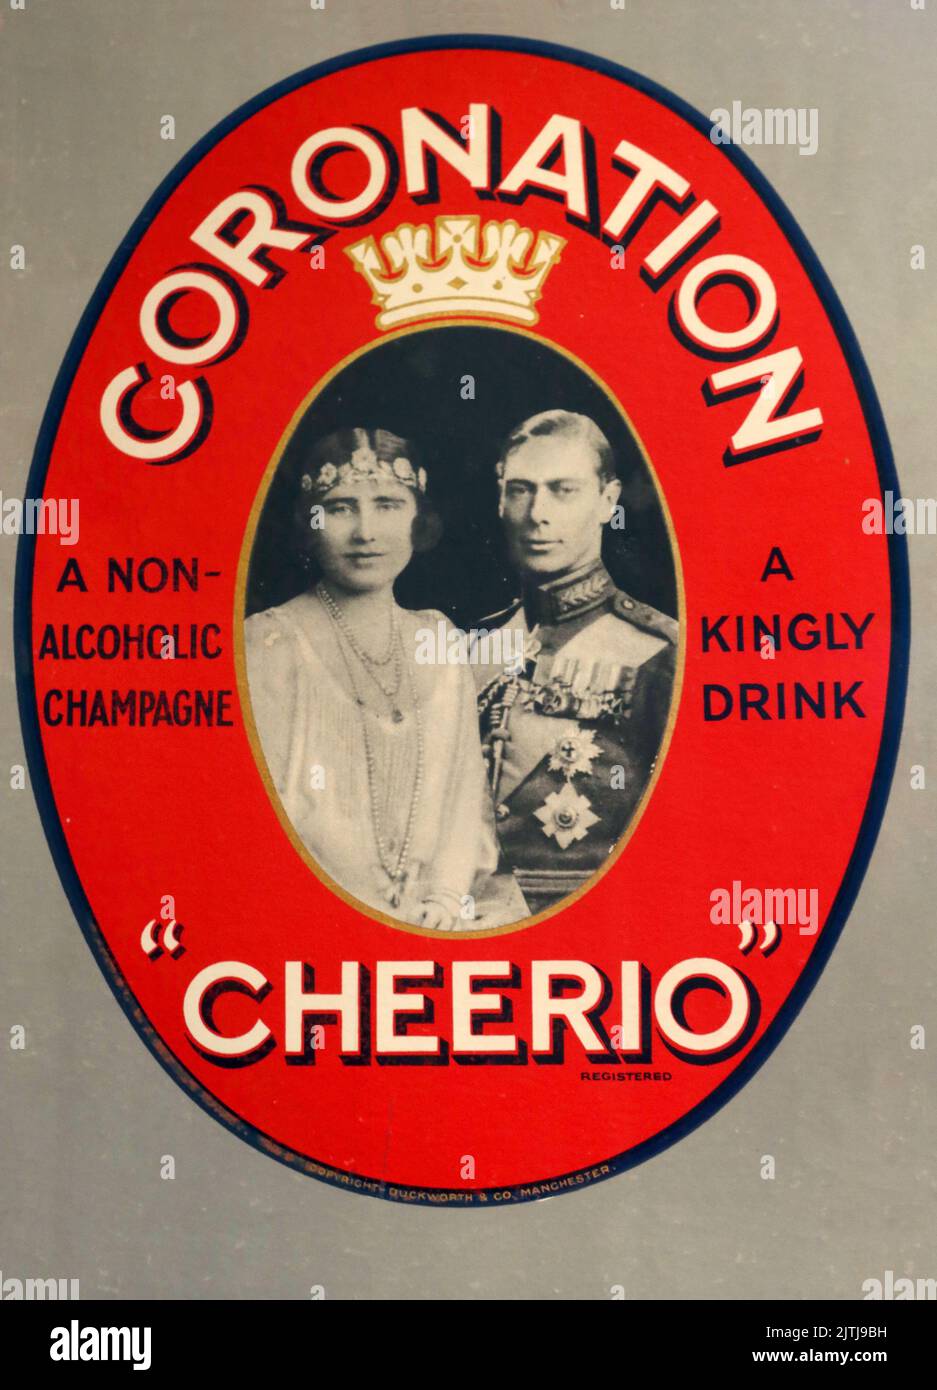 Coronation Cheerio, A non-Alcoholic Champagne, A Kingly Drink Stock Photo